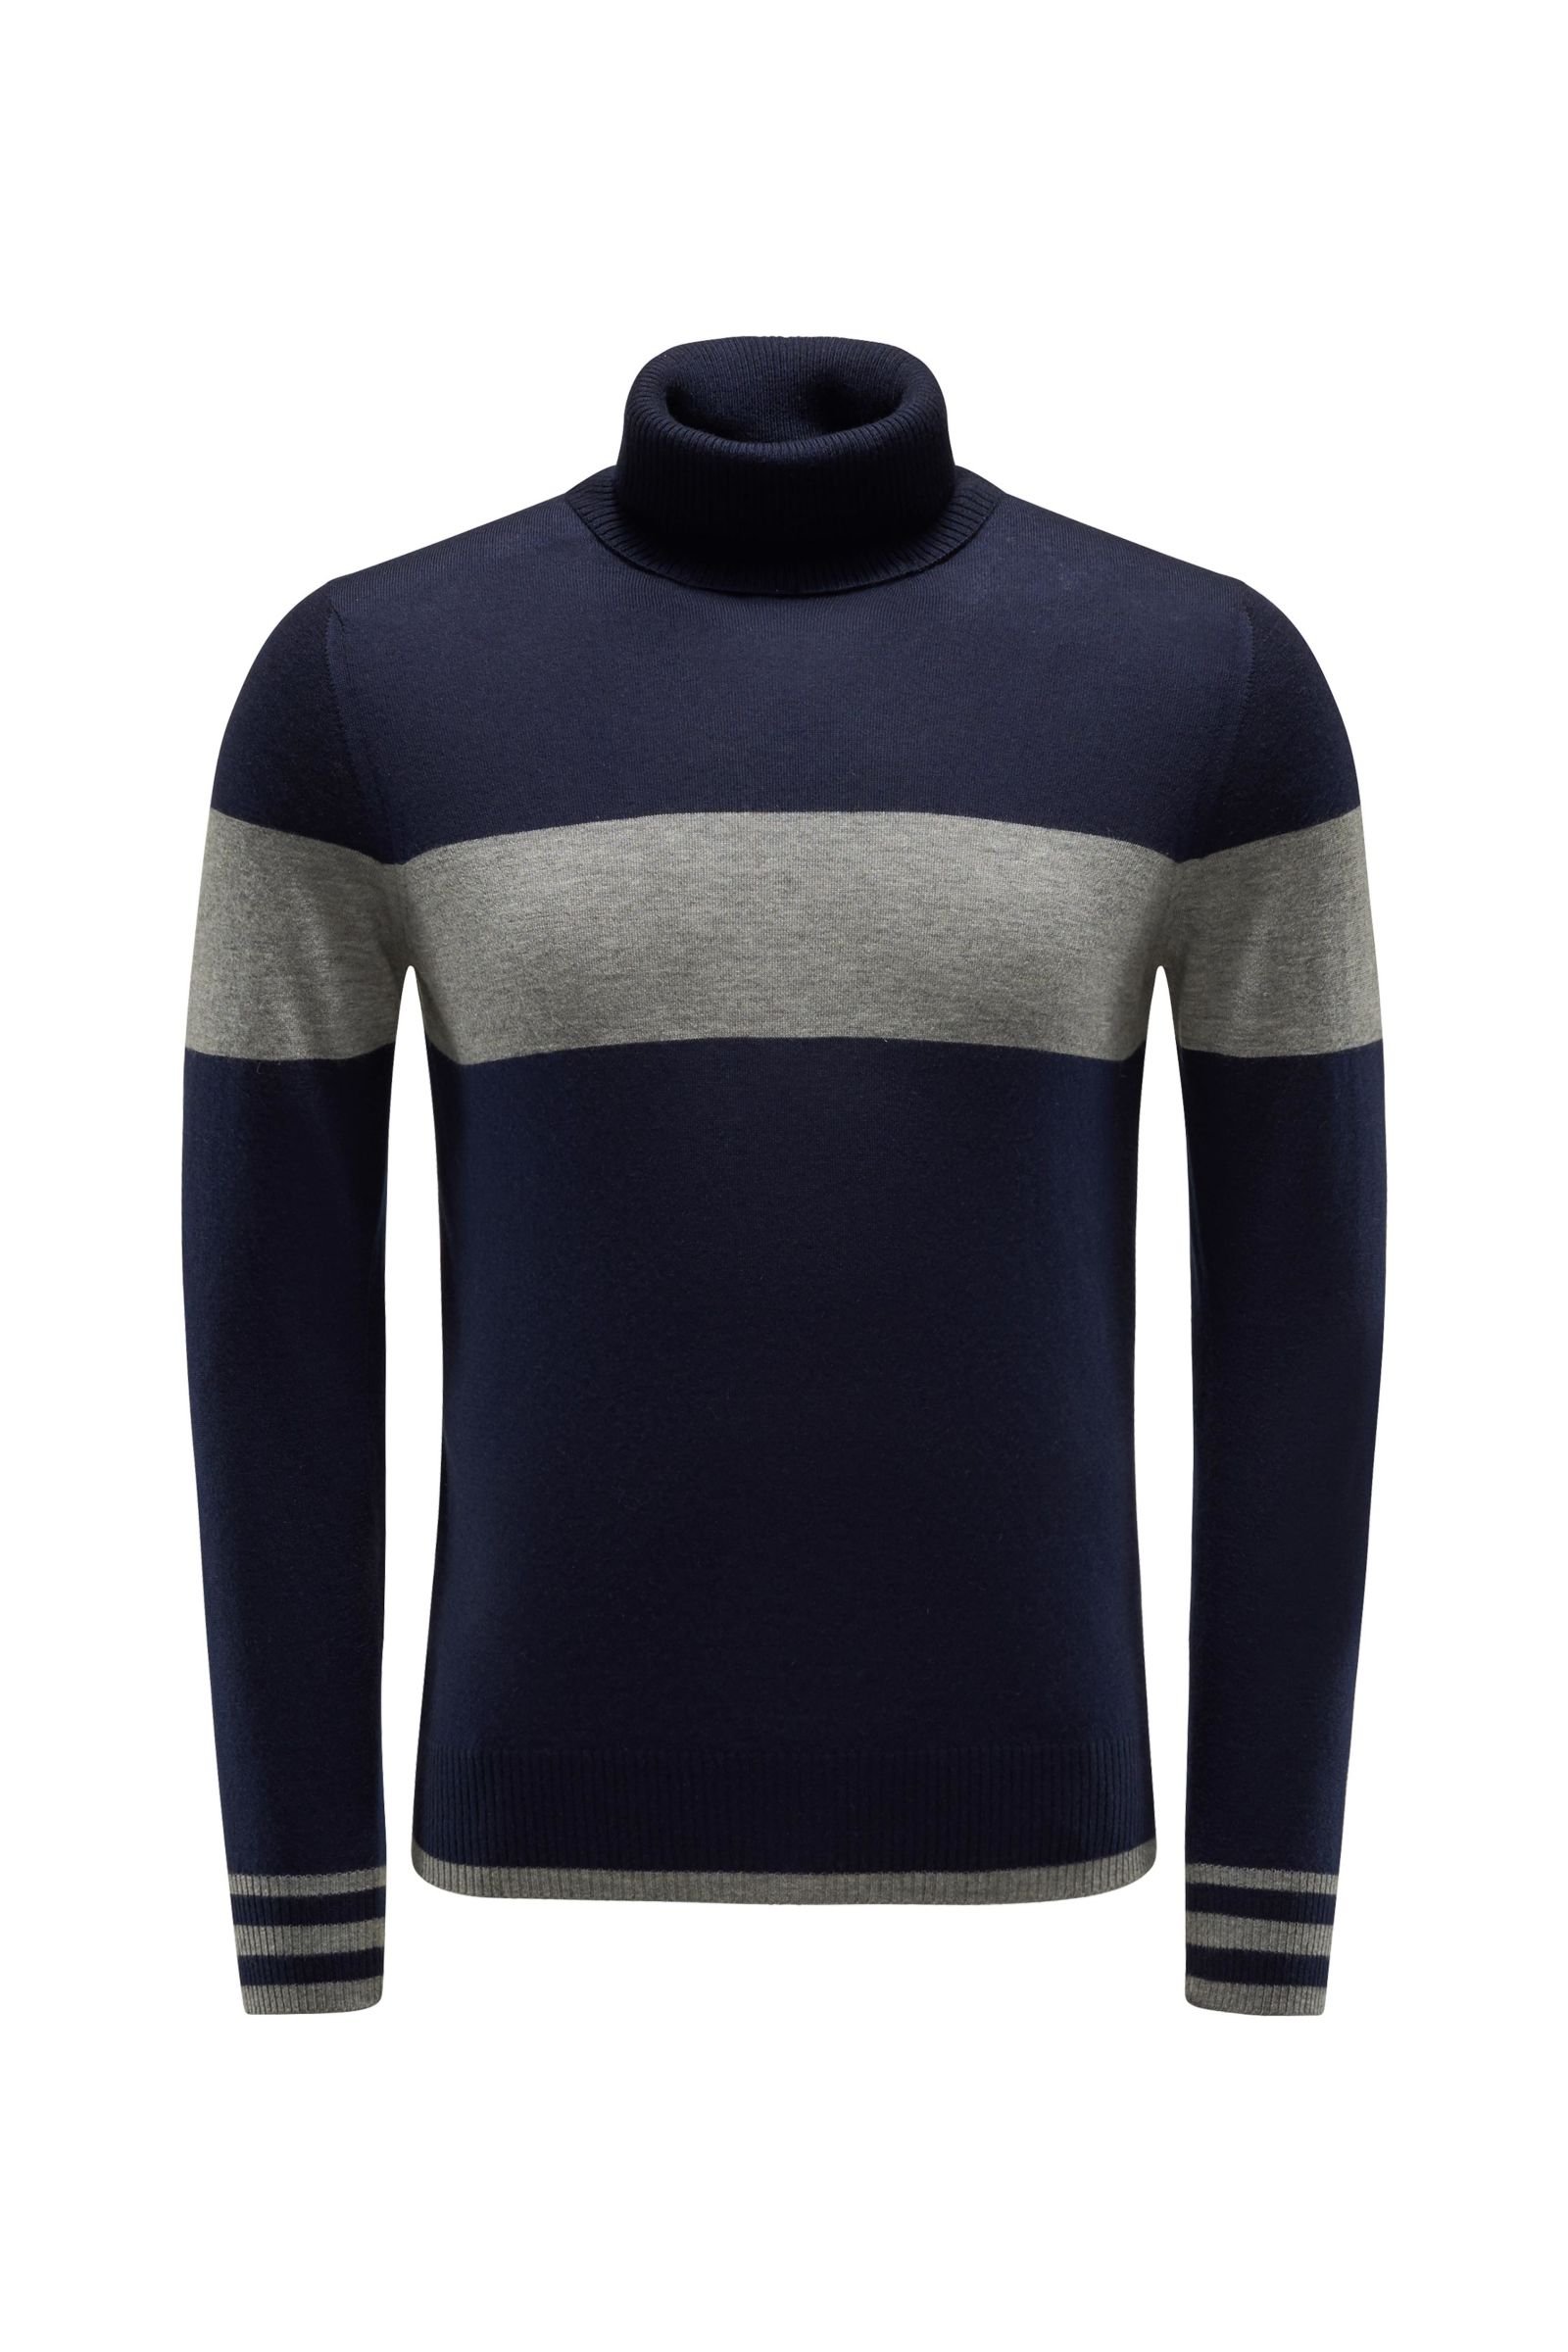 Cashmere turtleneck jumper 'No.10' navy/grey striped